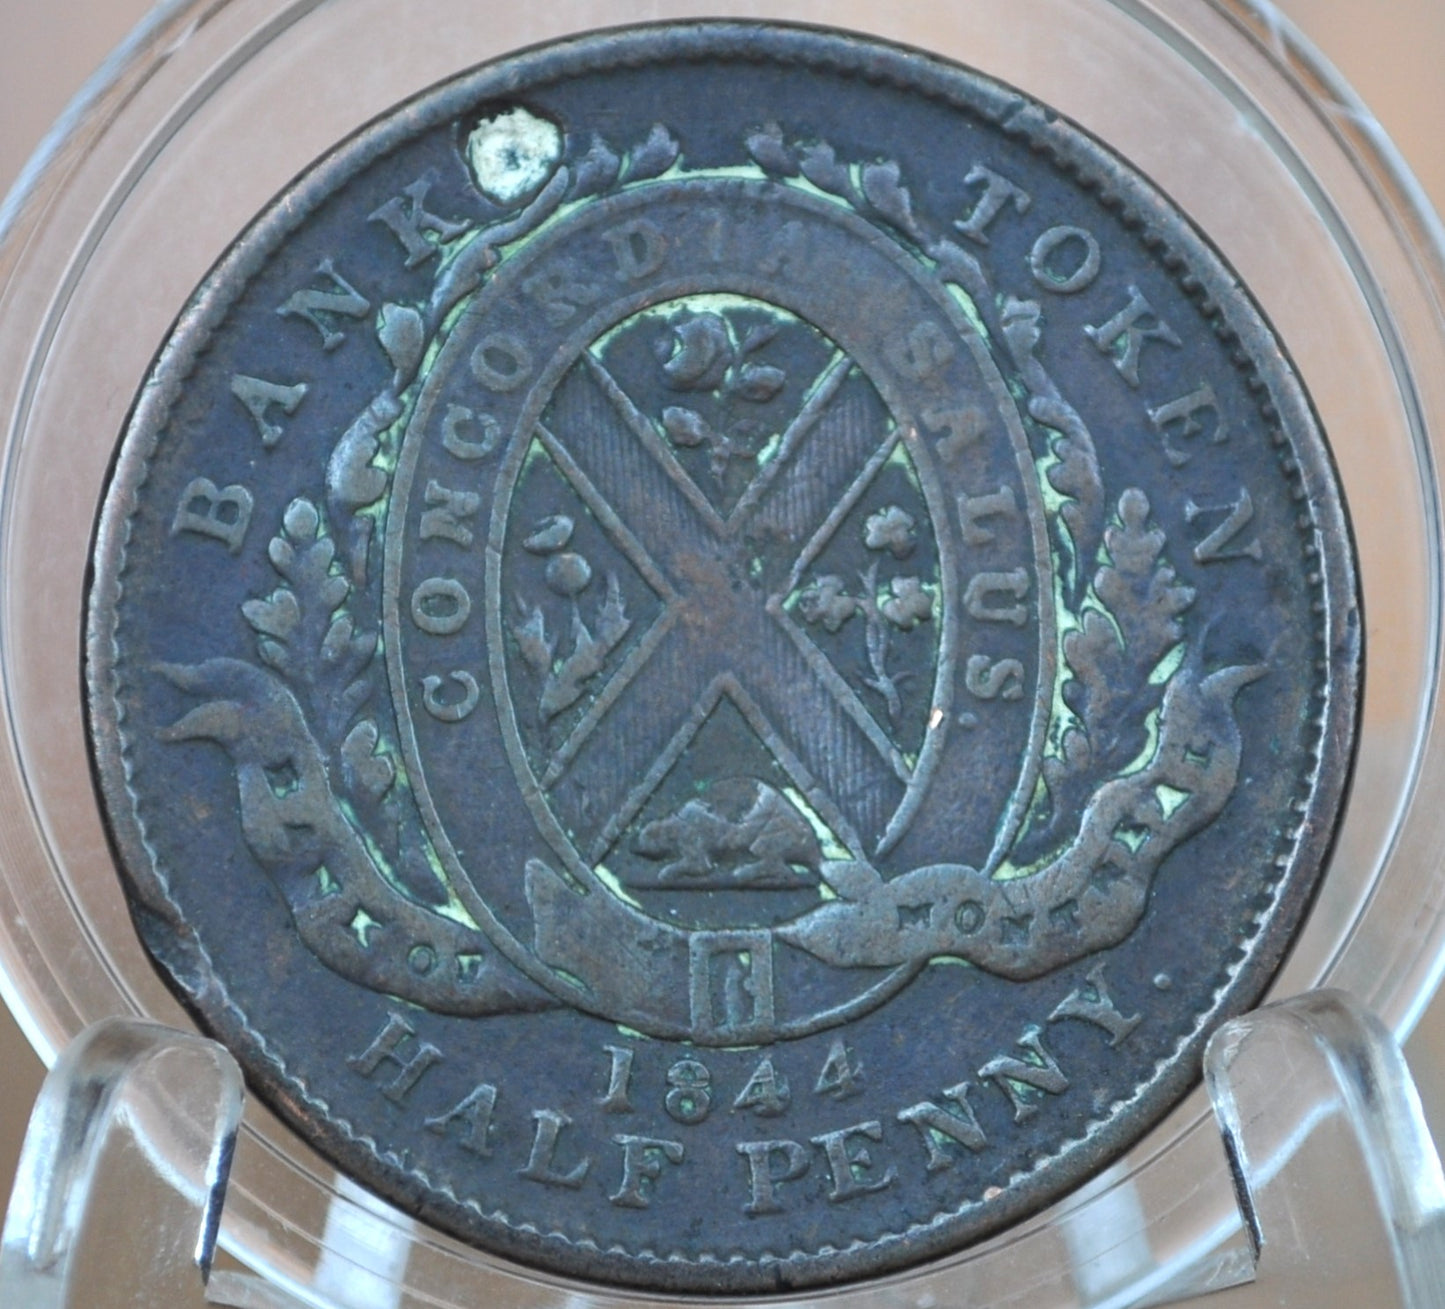 1844 Bank Token Half Penny Lower Canada - Good Detail, Damaged - 1/2 Penny Bank Token 1844 Bank of Montreal Canadian Bank Token